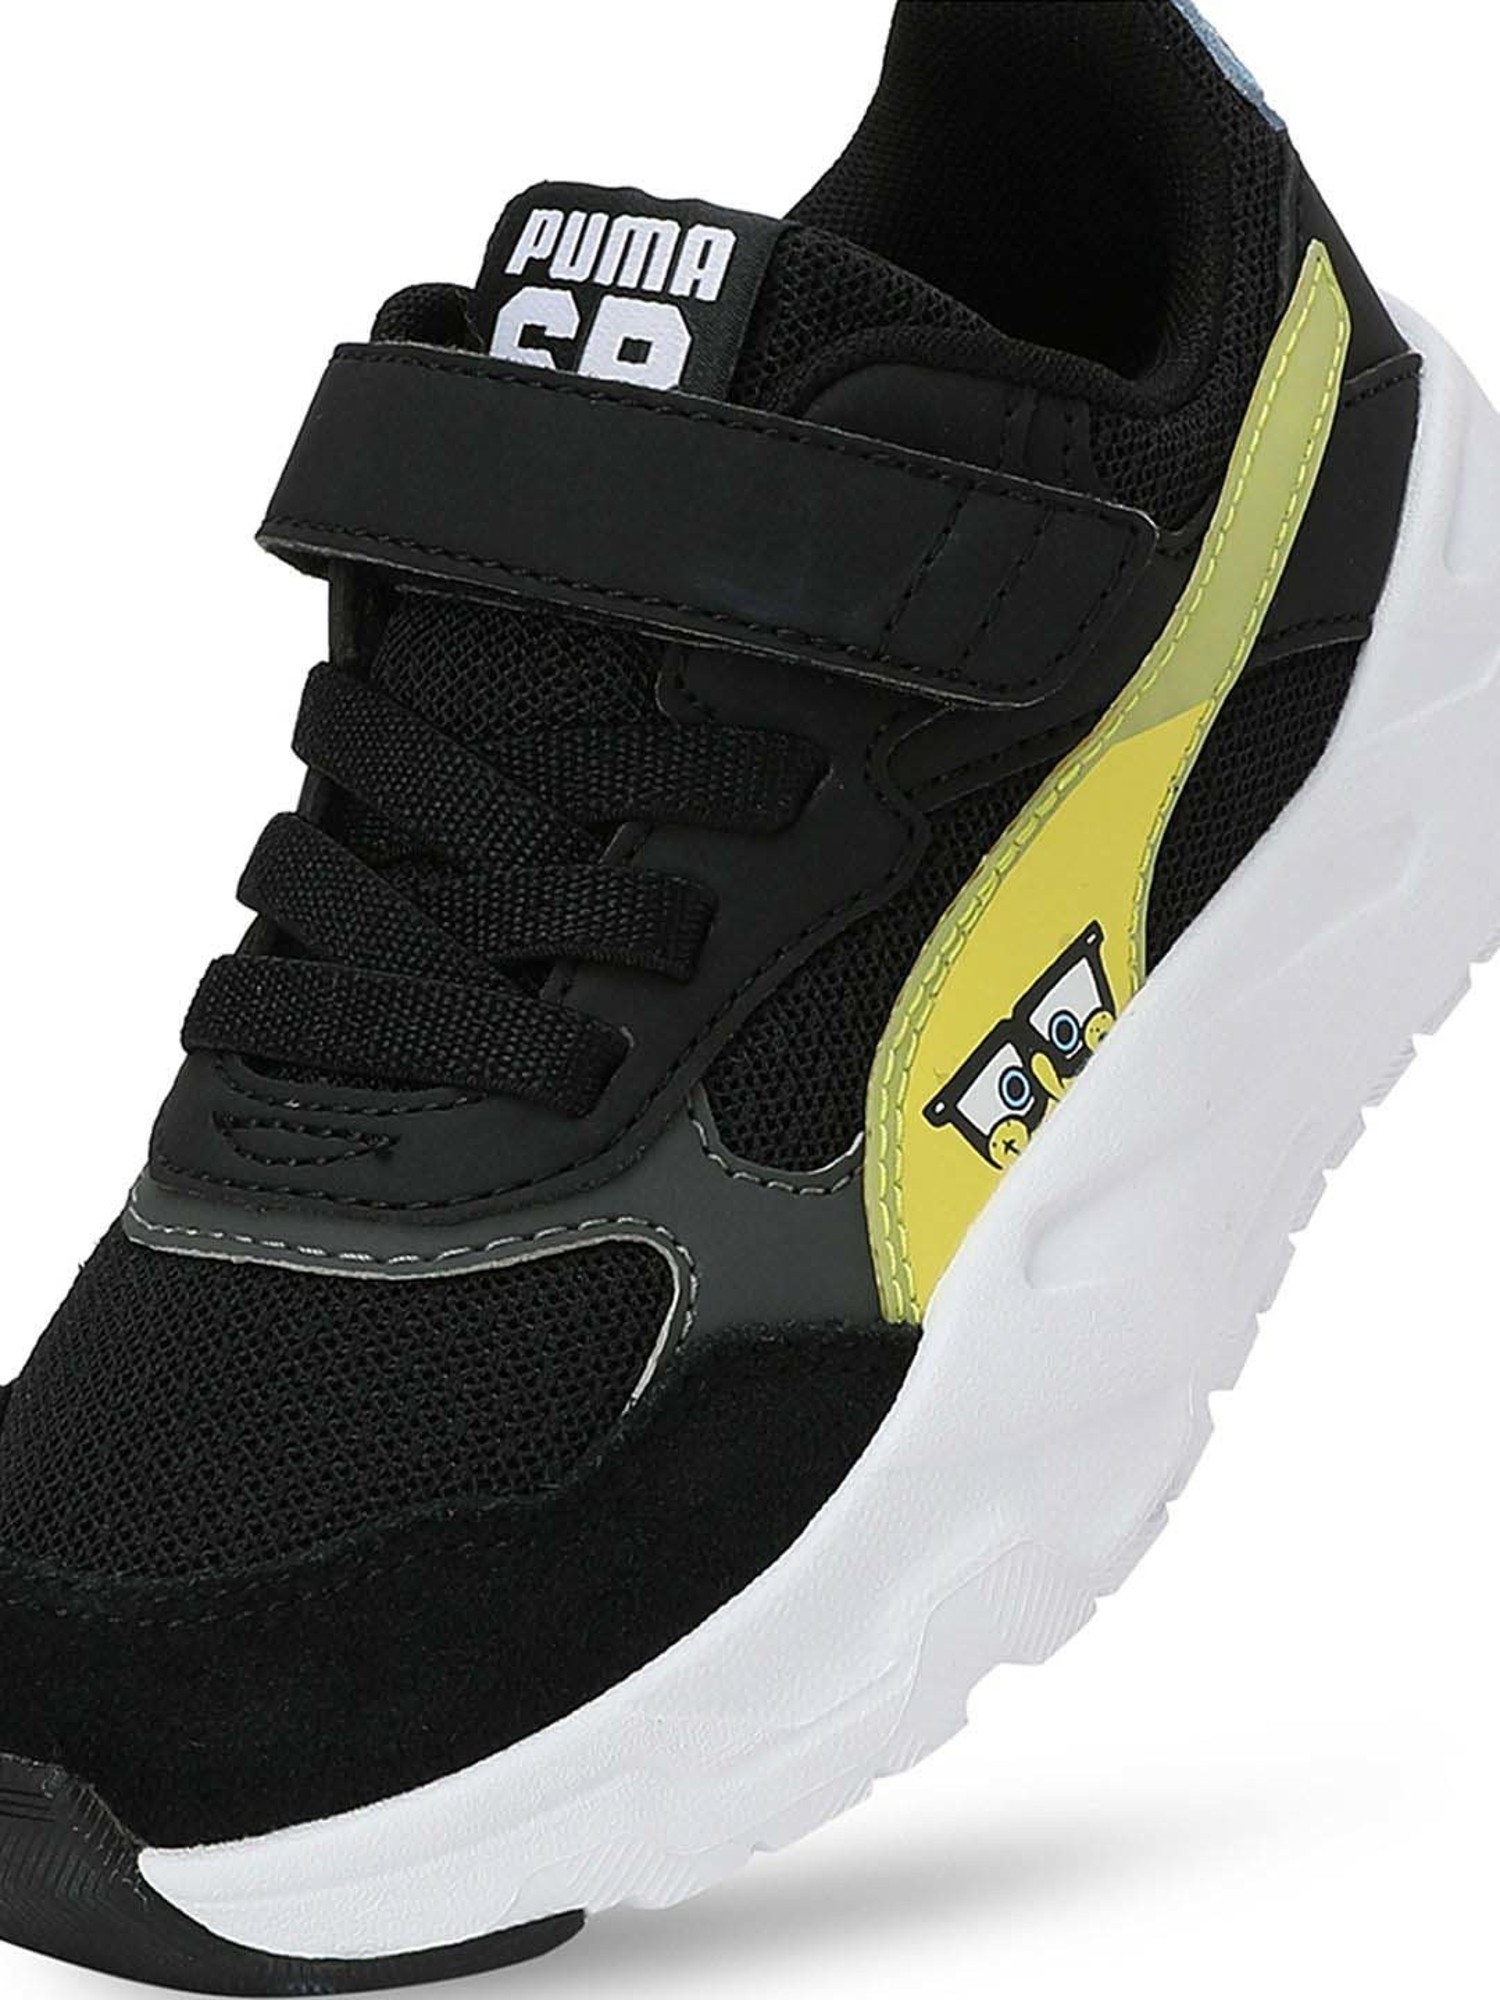 Buy Puma Tata & Casual AC+ Price PS Best Trinity Black Sneakers Spongebob Kids CLiQ Yellow at @ for